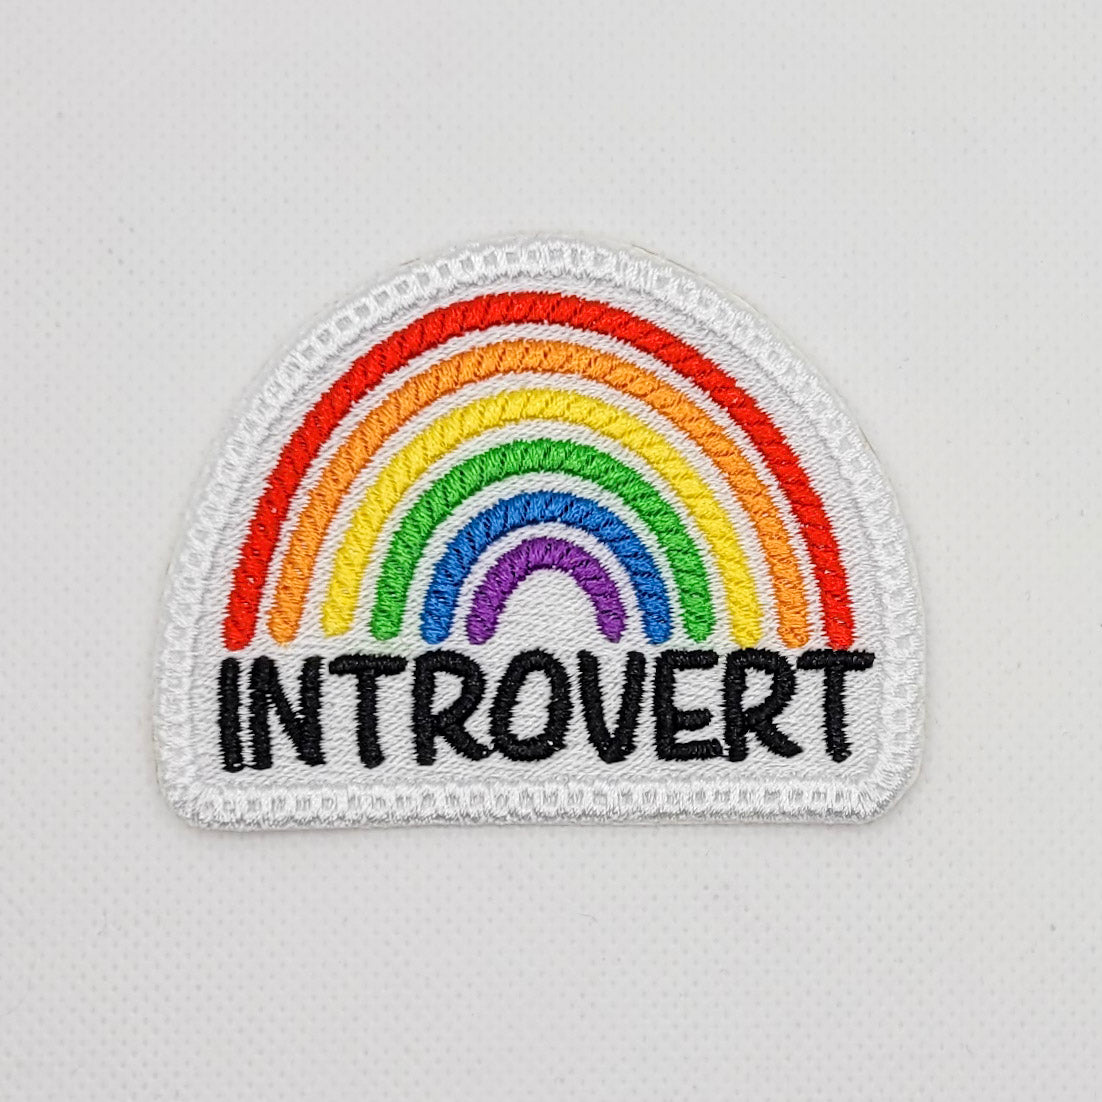 Introvert Rainbow Patch